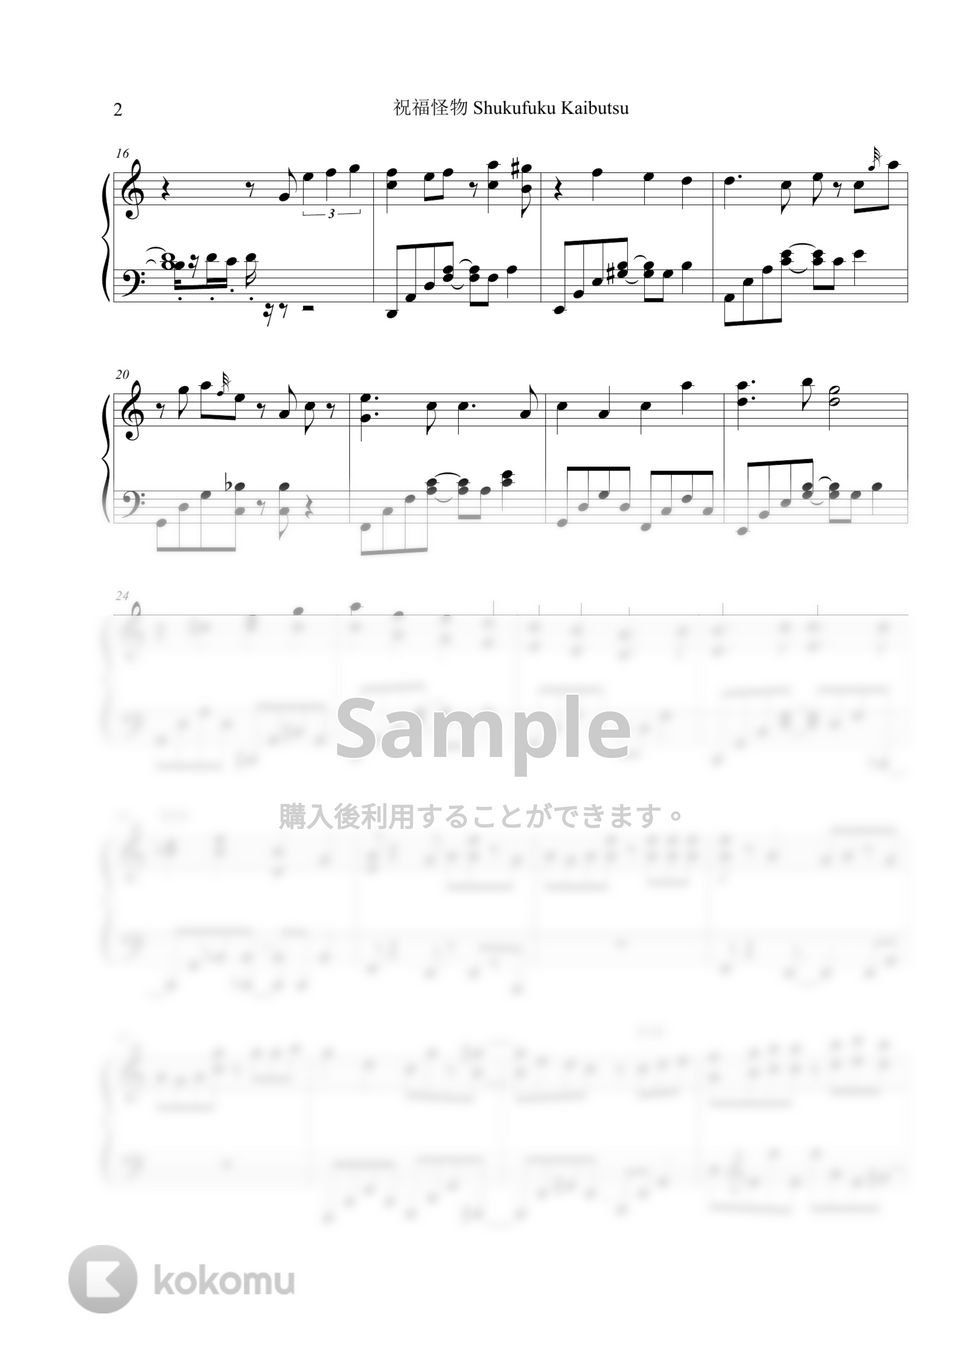 YOASOBI - 祝福怪物 (GUNDAM BEASTARS - Piano Mashup) (機動戦士ガンダム 水星の魔女 OP X BEASTARS S2 OP) by Kyle Xian